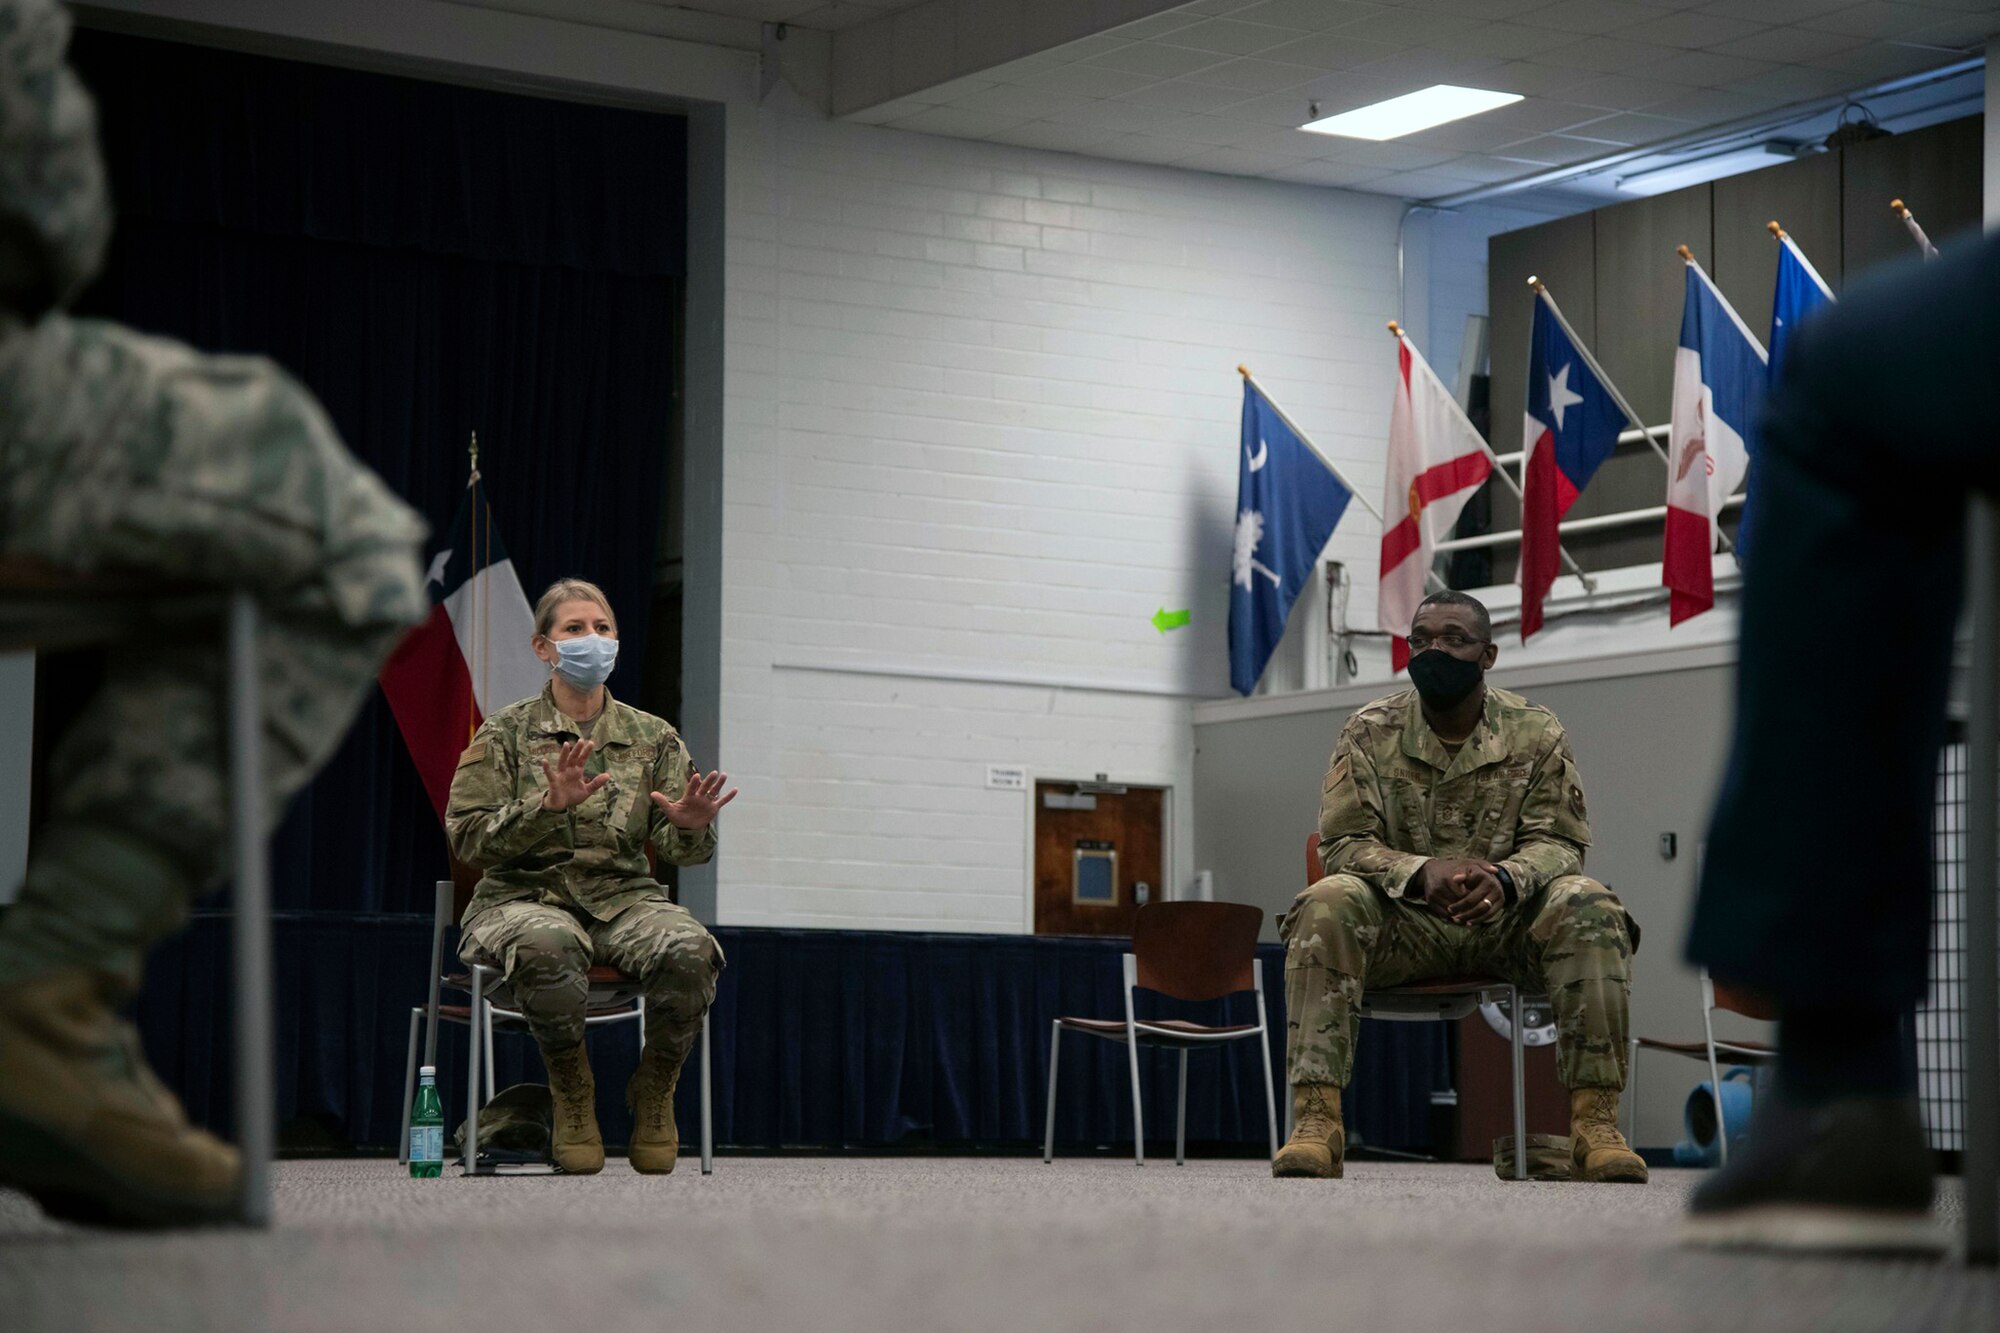 Brig. Gen Caroline Miller, 502nd Air Base Wing and Joint Base San Antonio commander, leads a diversity forum